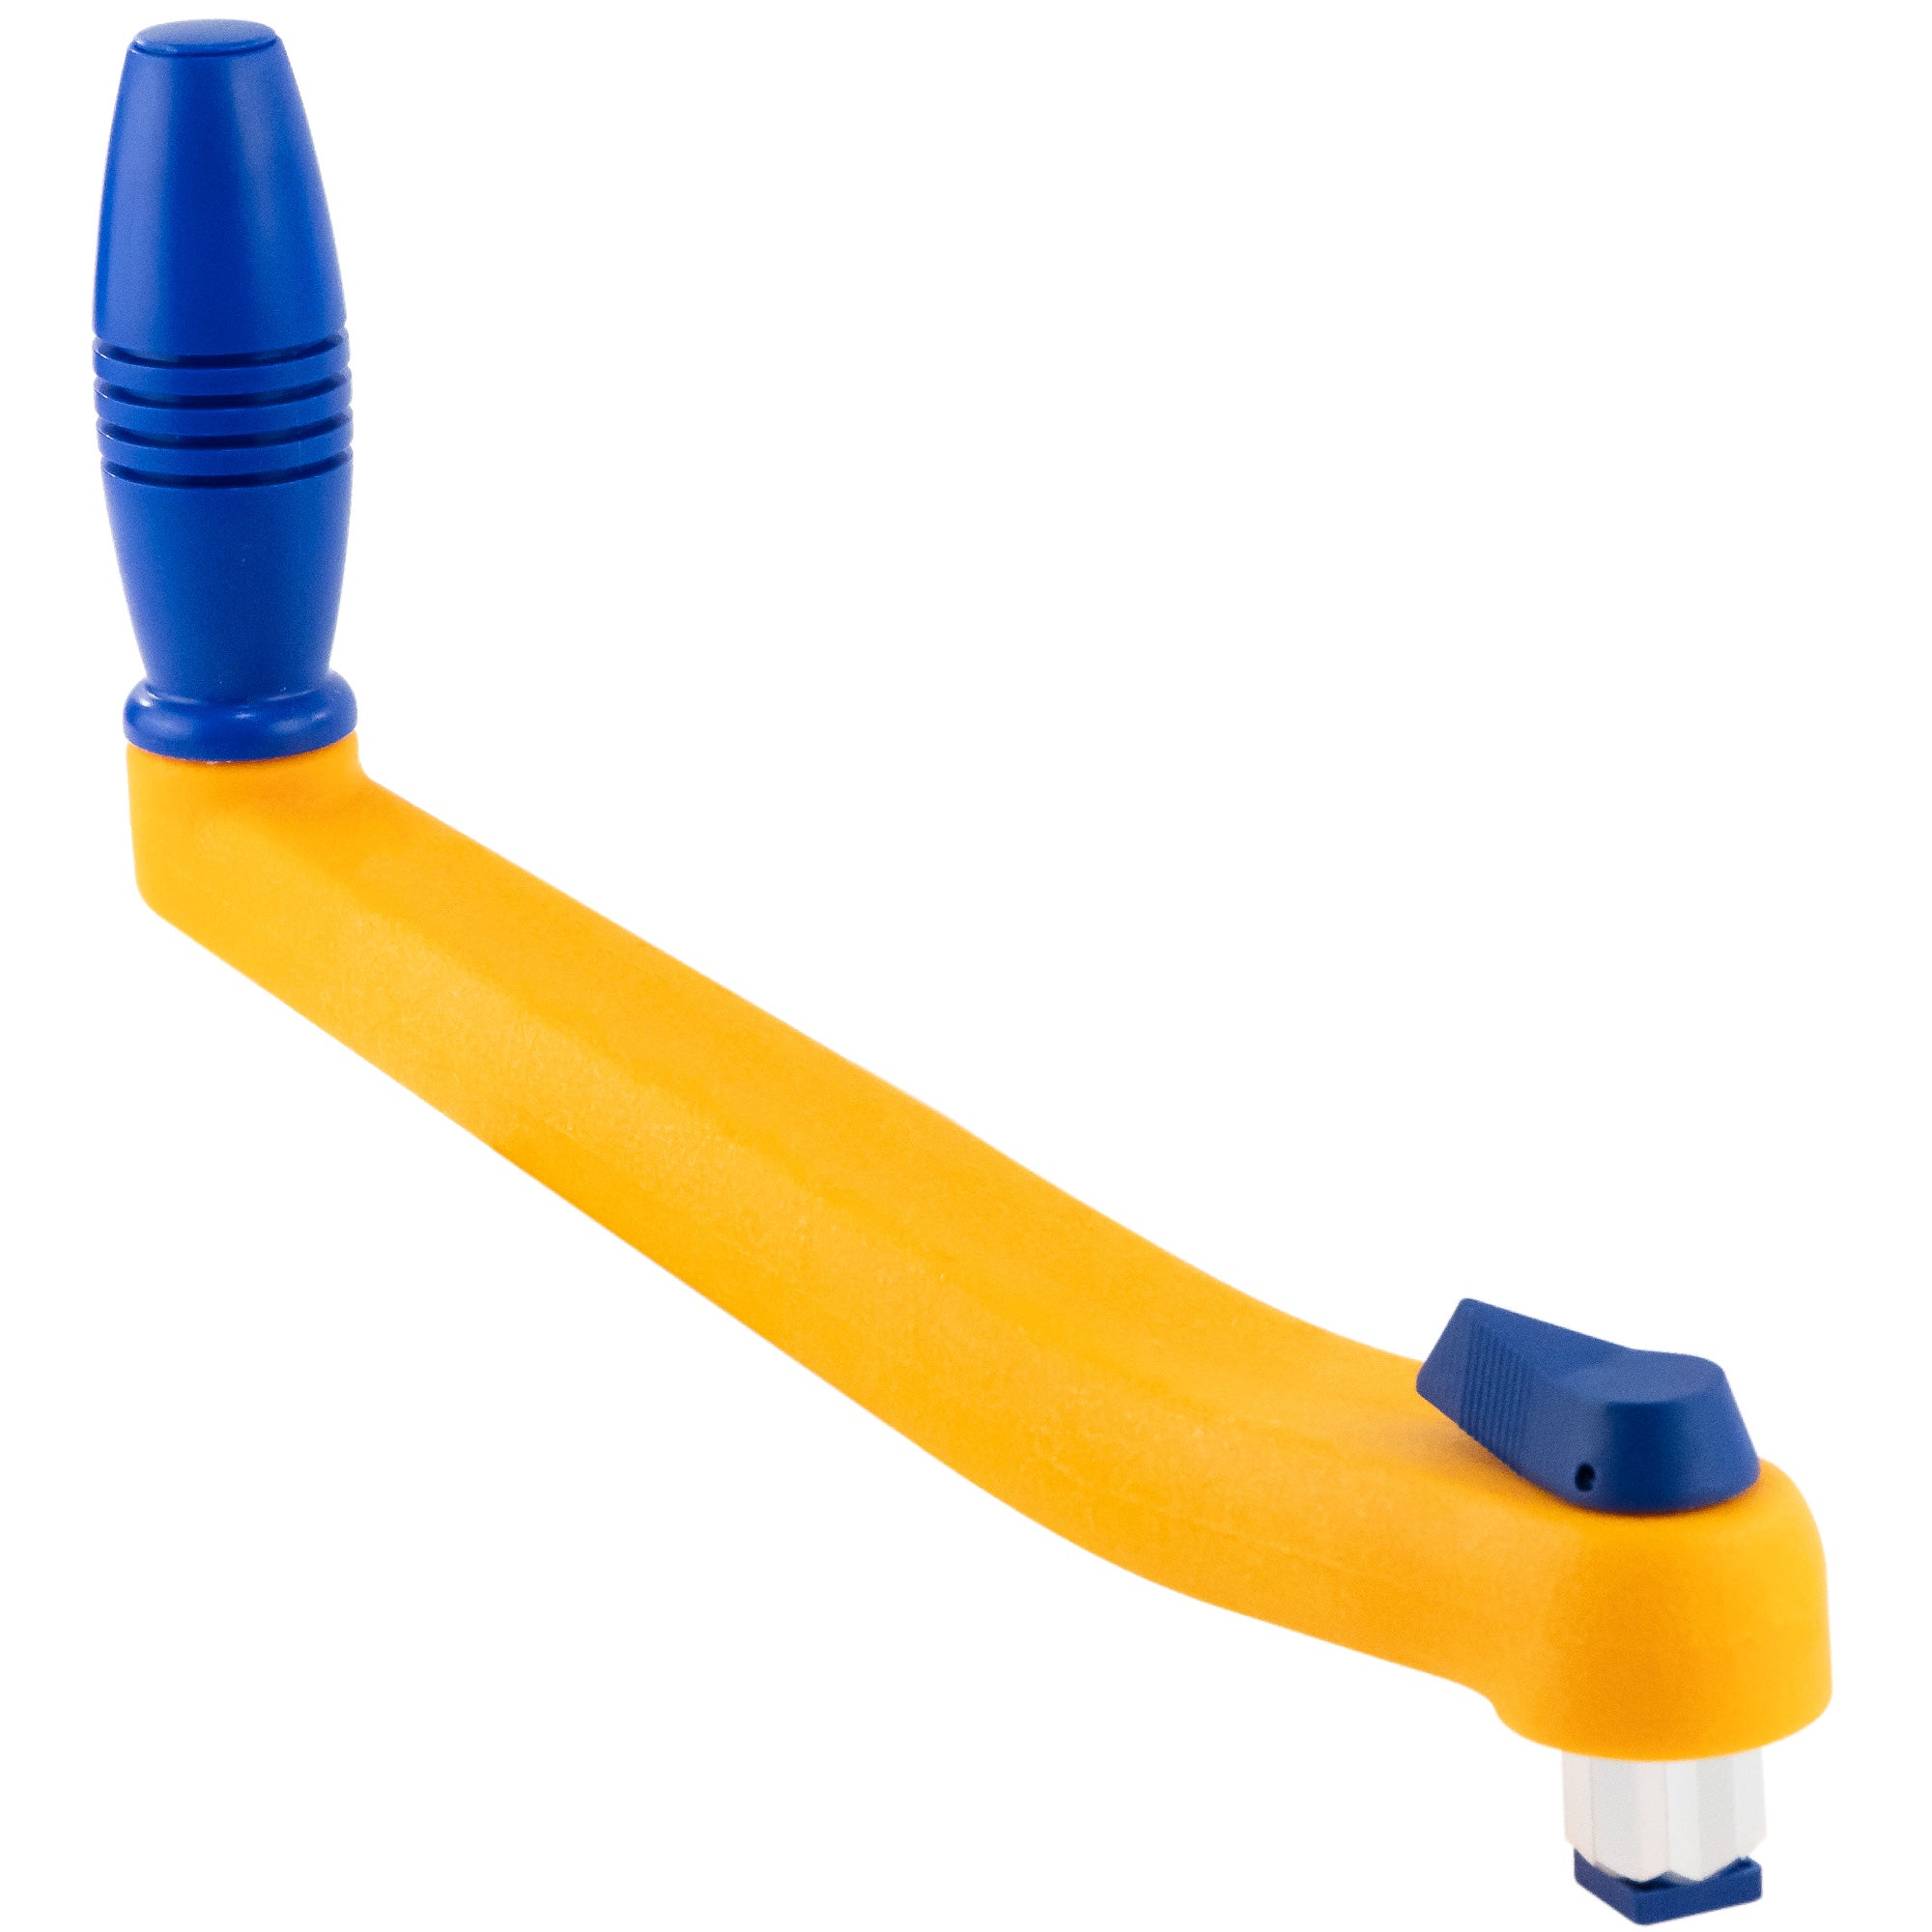 10" Universal Floating Lock-in Winch Handle, Orange/Blue - FO87